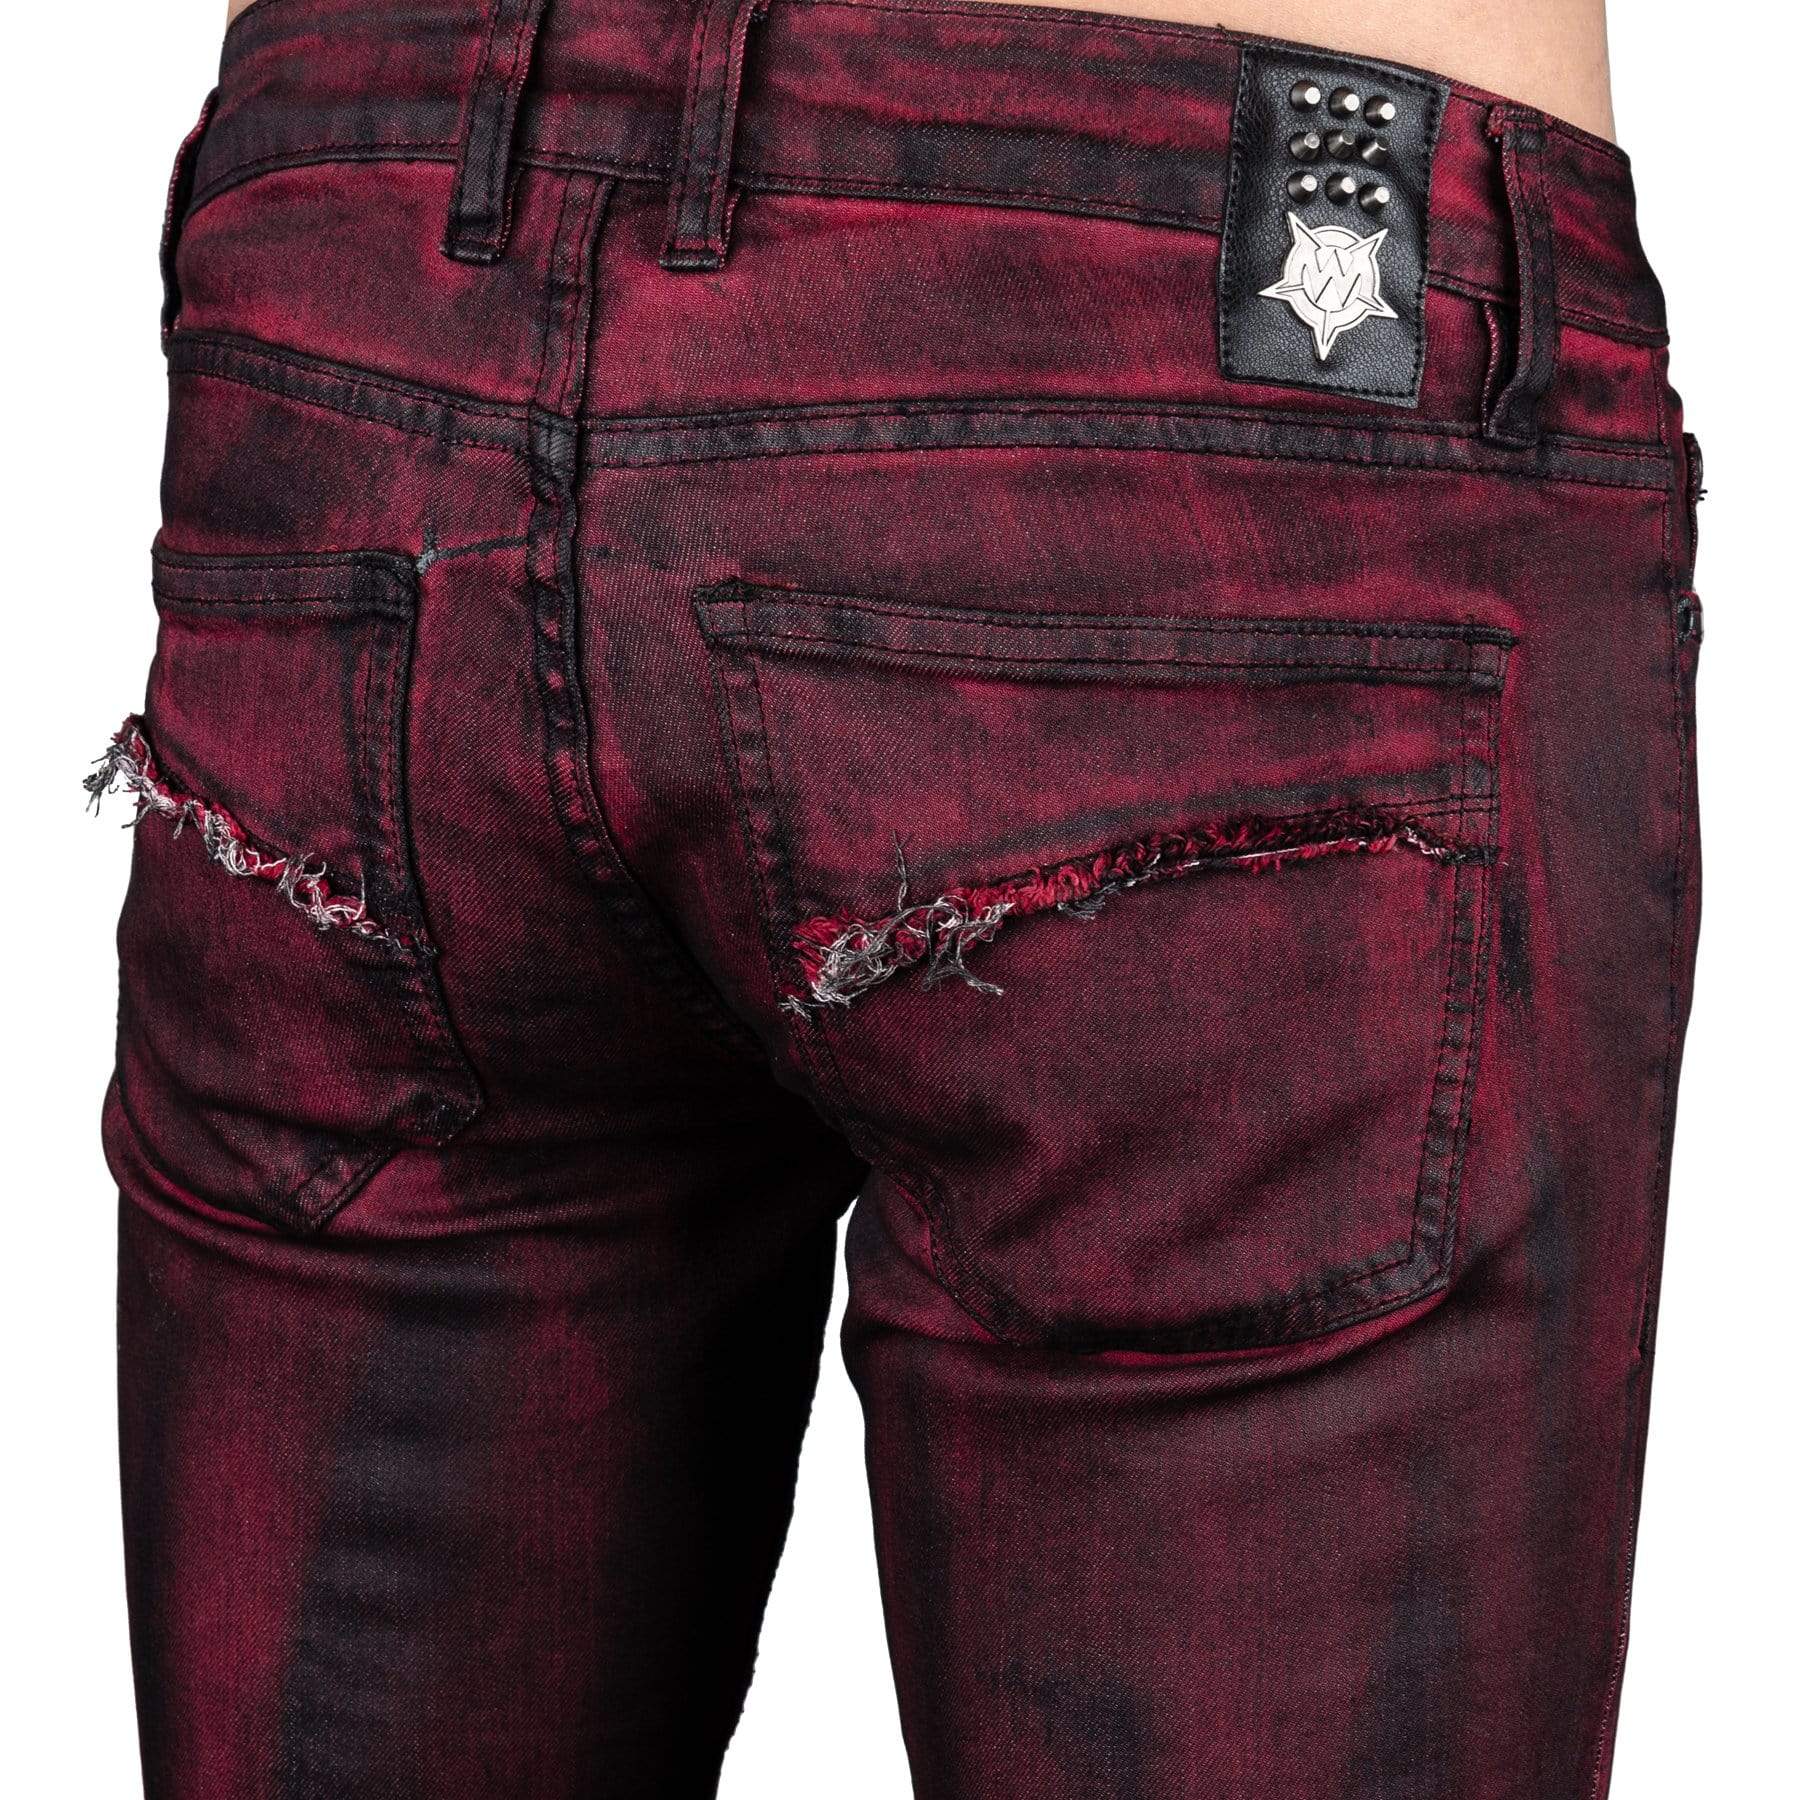 Wornstar Clothing Mens Jeans Hellraiser Coated Denim Pants - Crimson